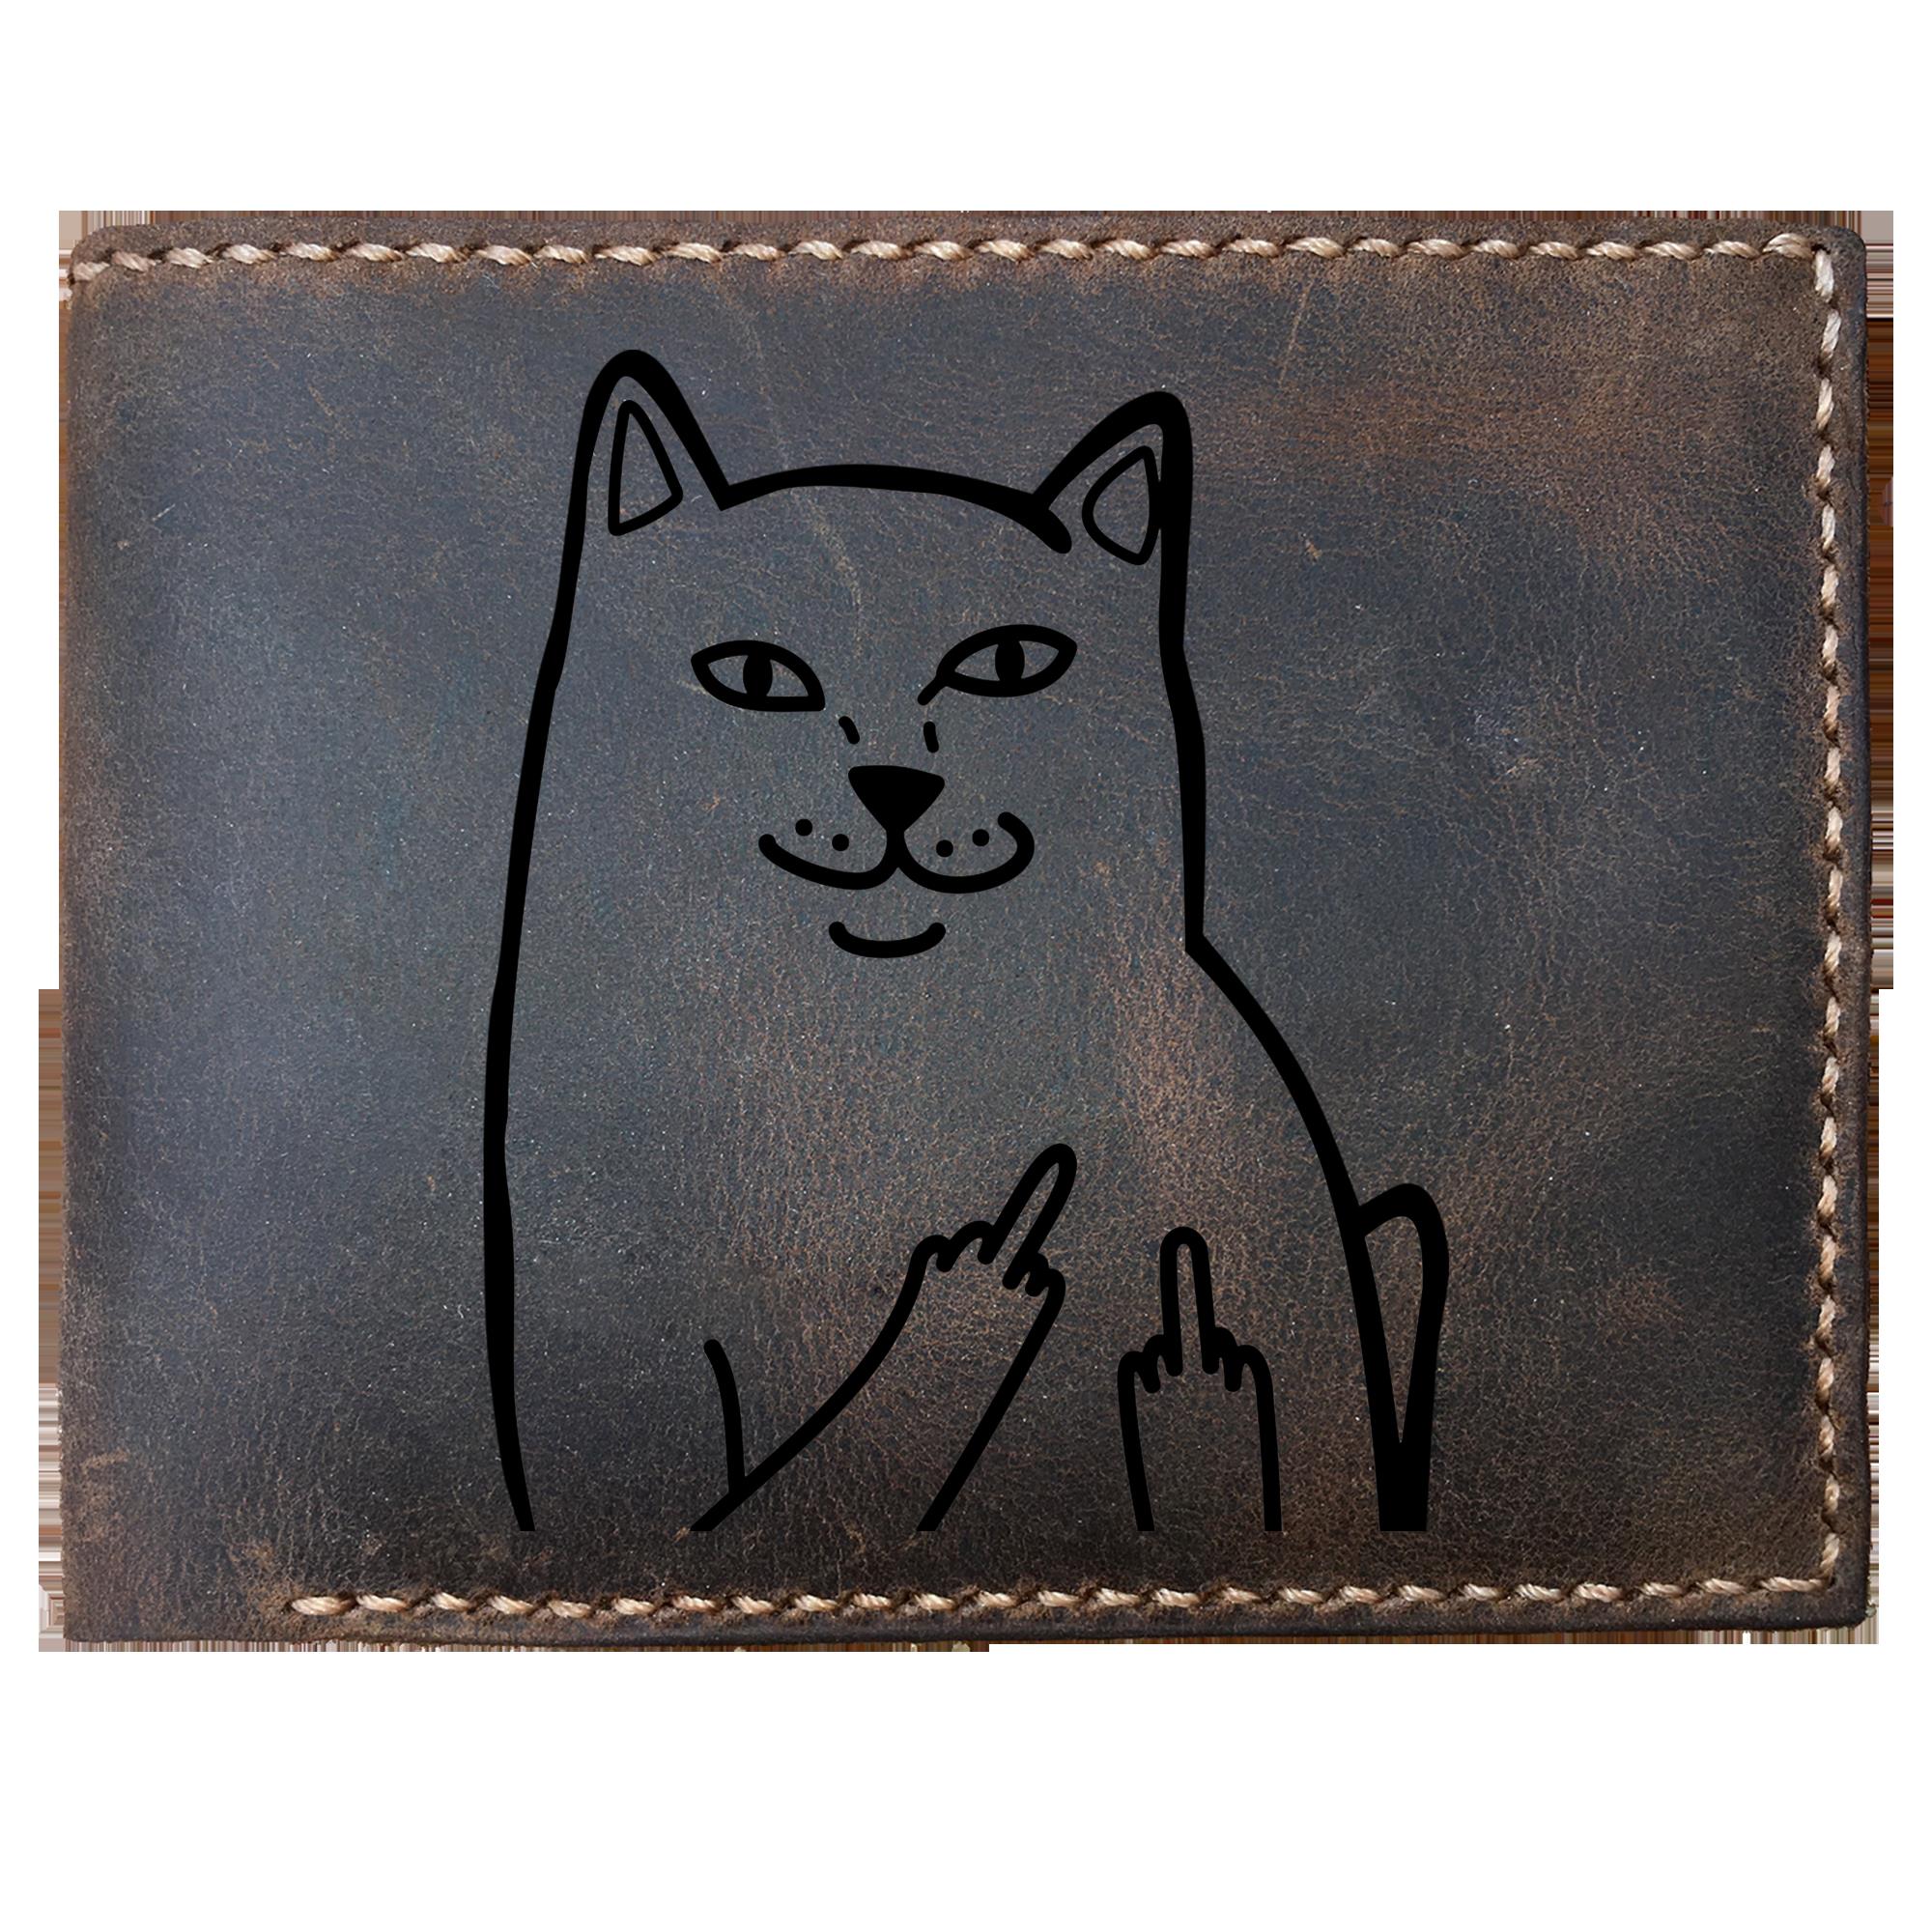 Skitongifts Funny Custom Laser Engraved Bifold Leather Wallet For Men, Fcku Cat Lord Nermal